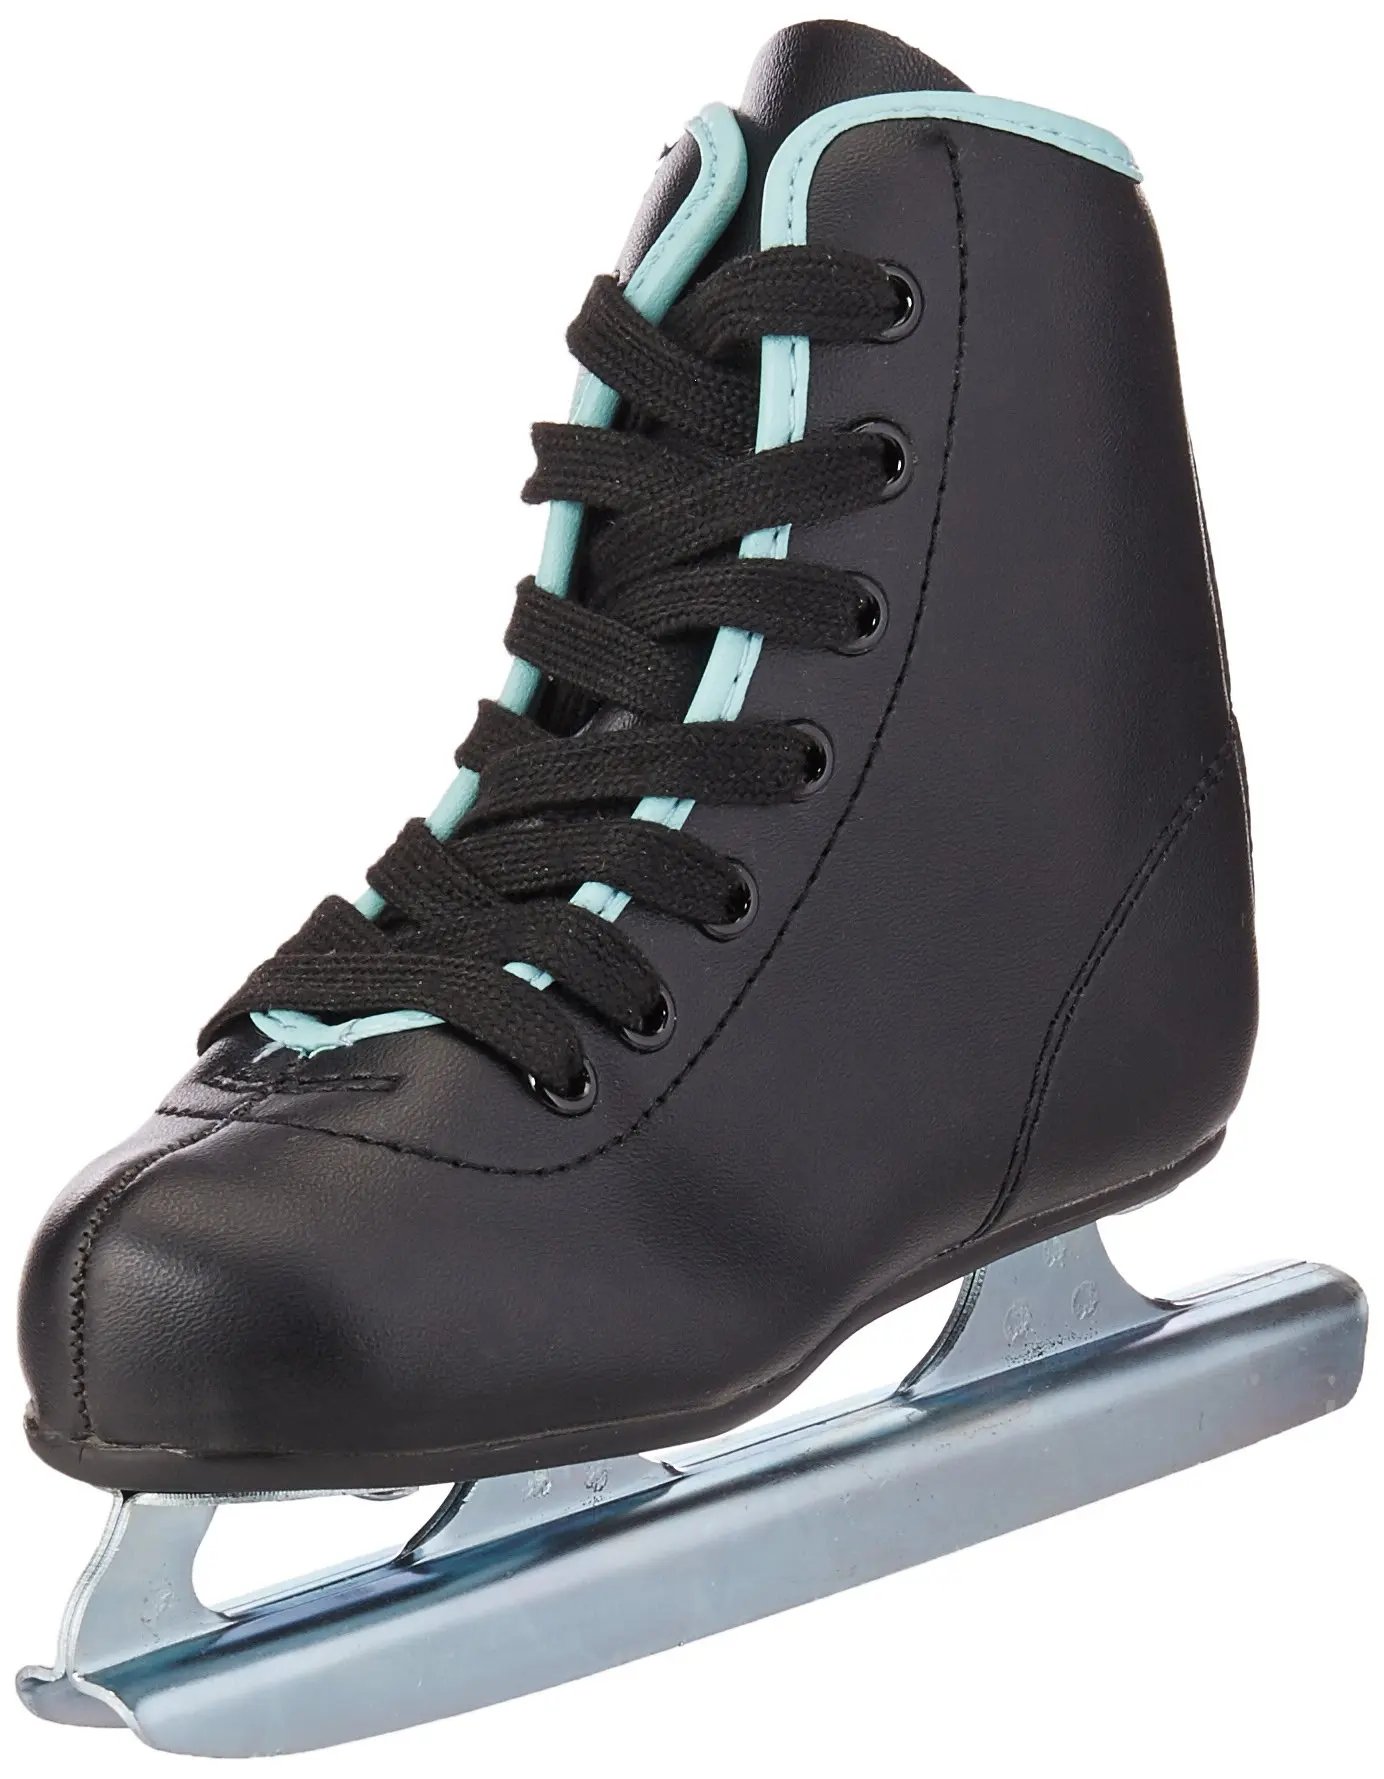 double ice skates